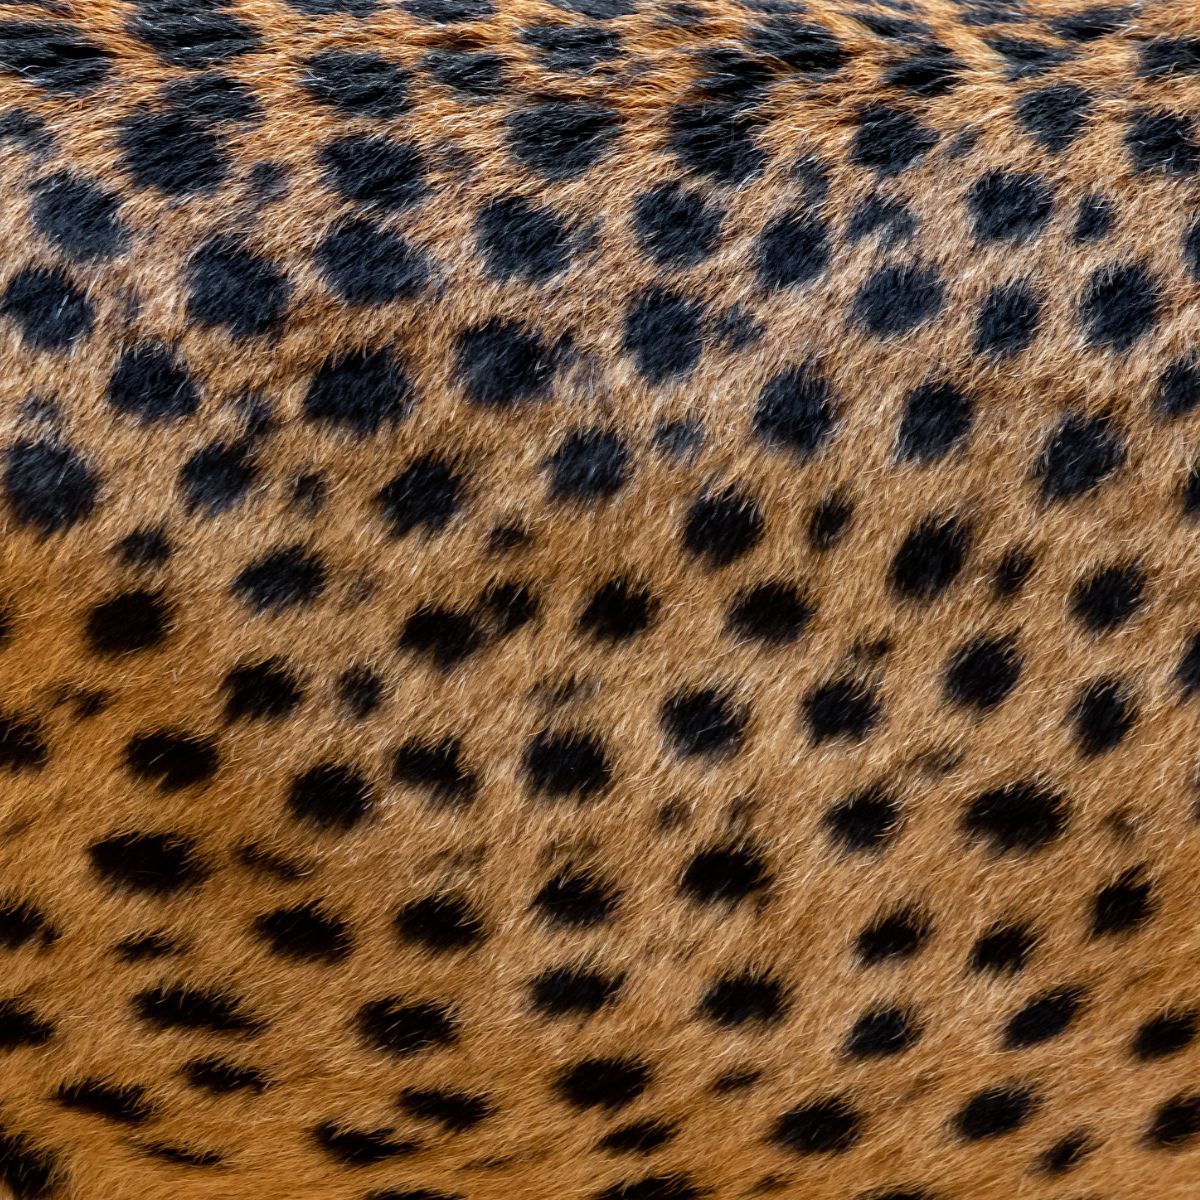 close-up photo of cheetah coat